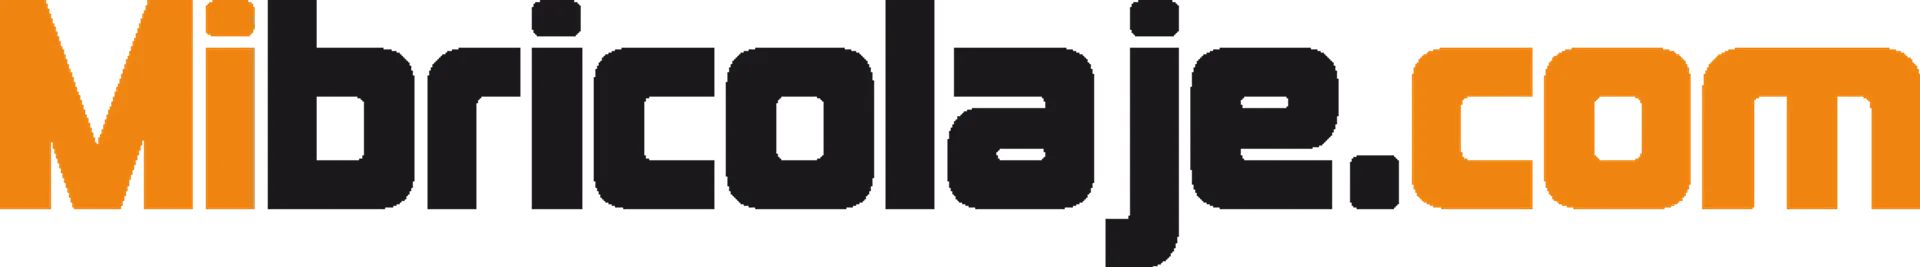 MIBROCOLAJE.COM logo